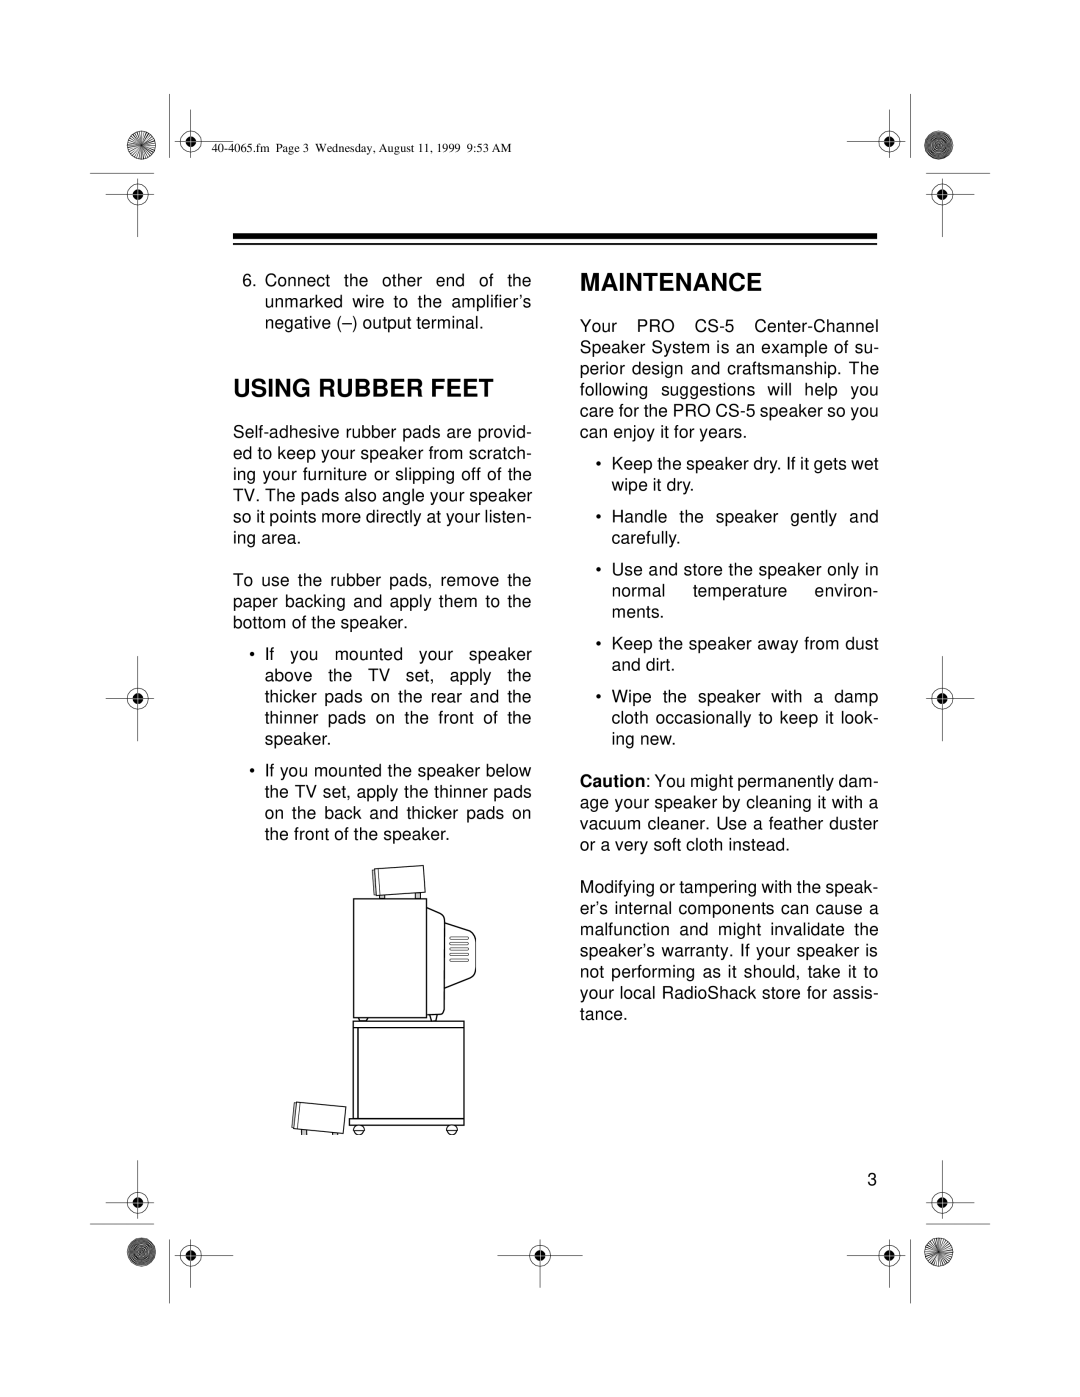 Optimus PRO CS-5 manual Using Rubber Feet, Maintenance 